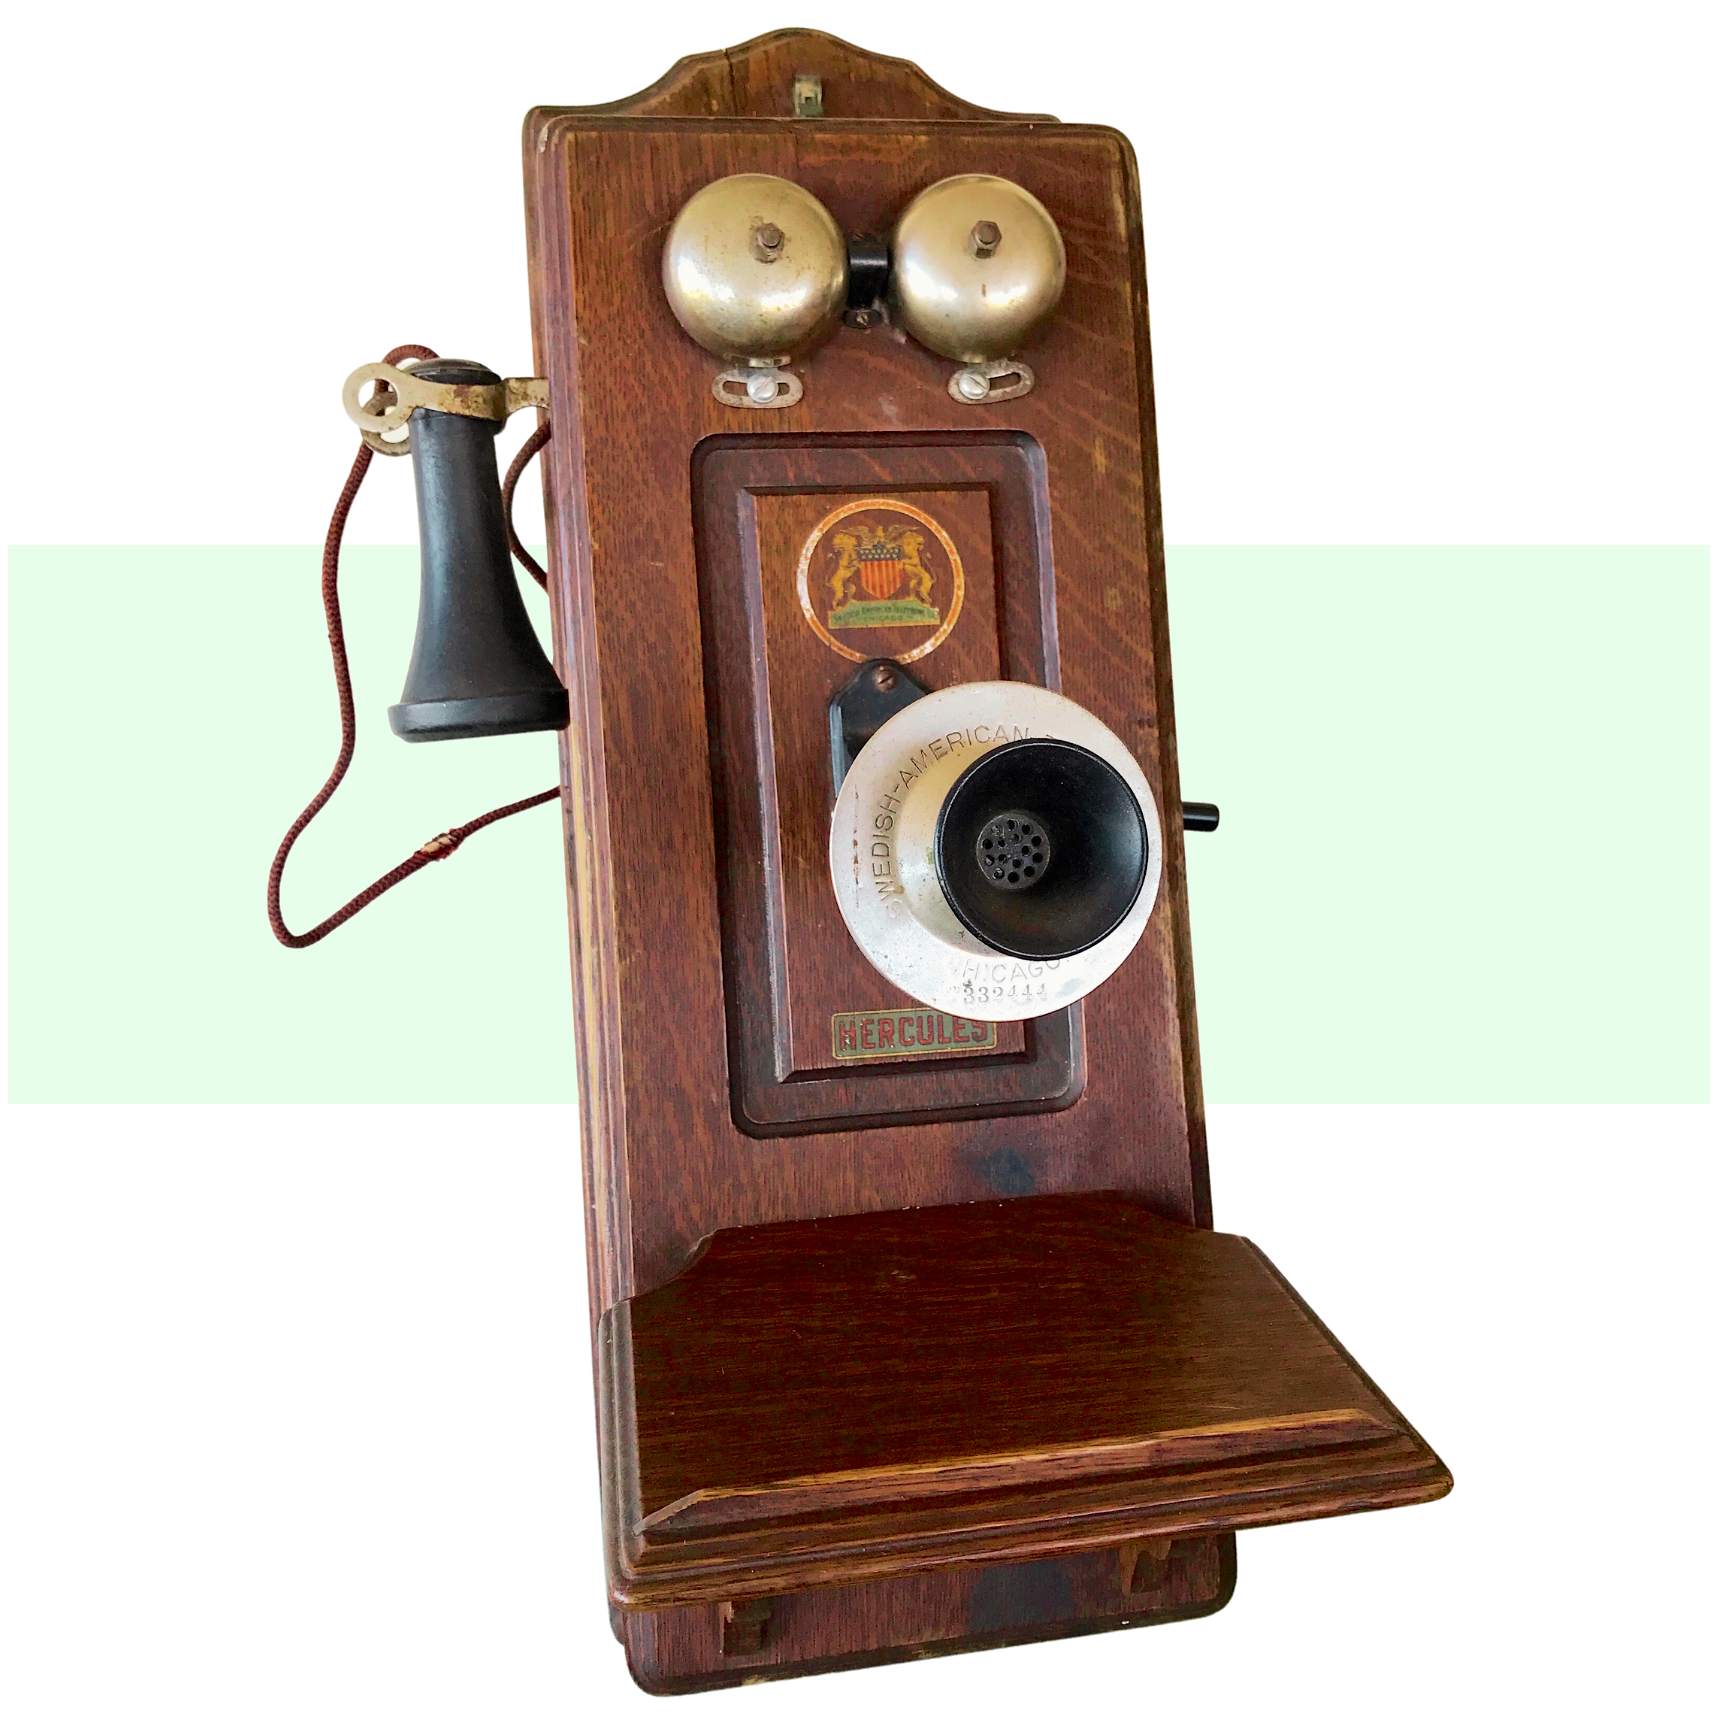 Swedish-American Telephone Co., est. 1899